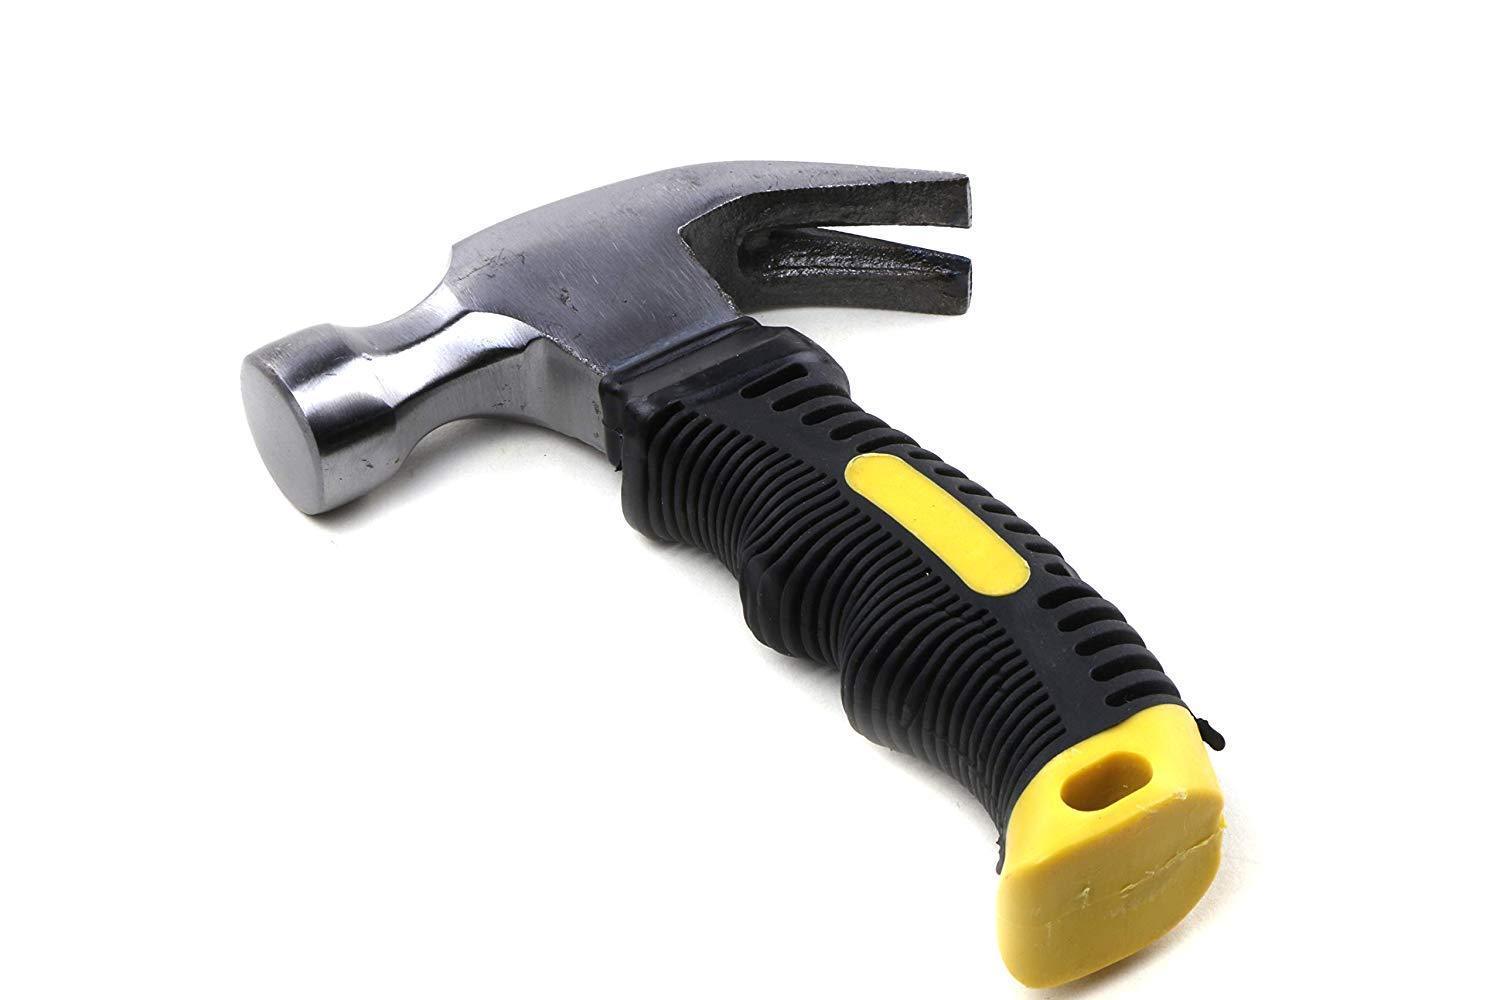 0462 Carpenter Mini Claw Hammer - SkyShopy